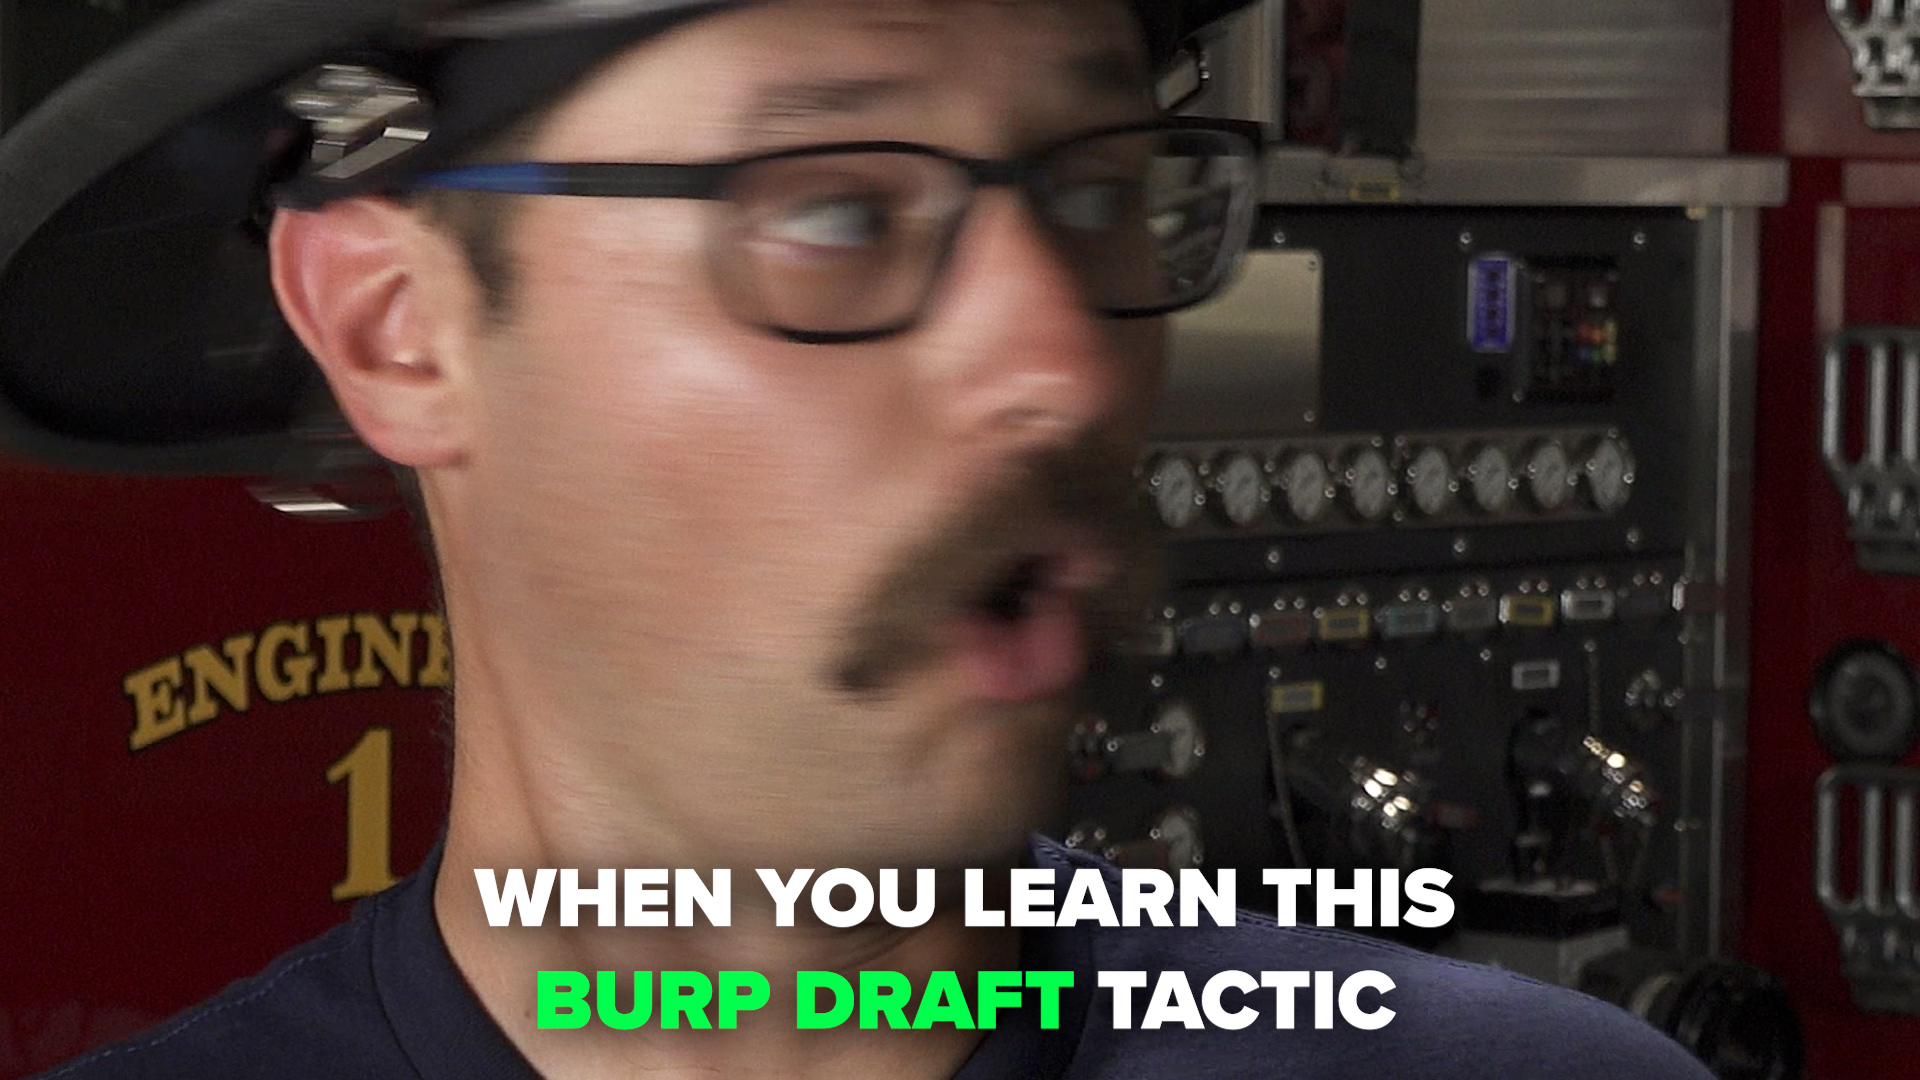 How to Burp Draft